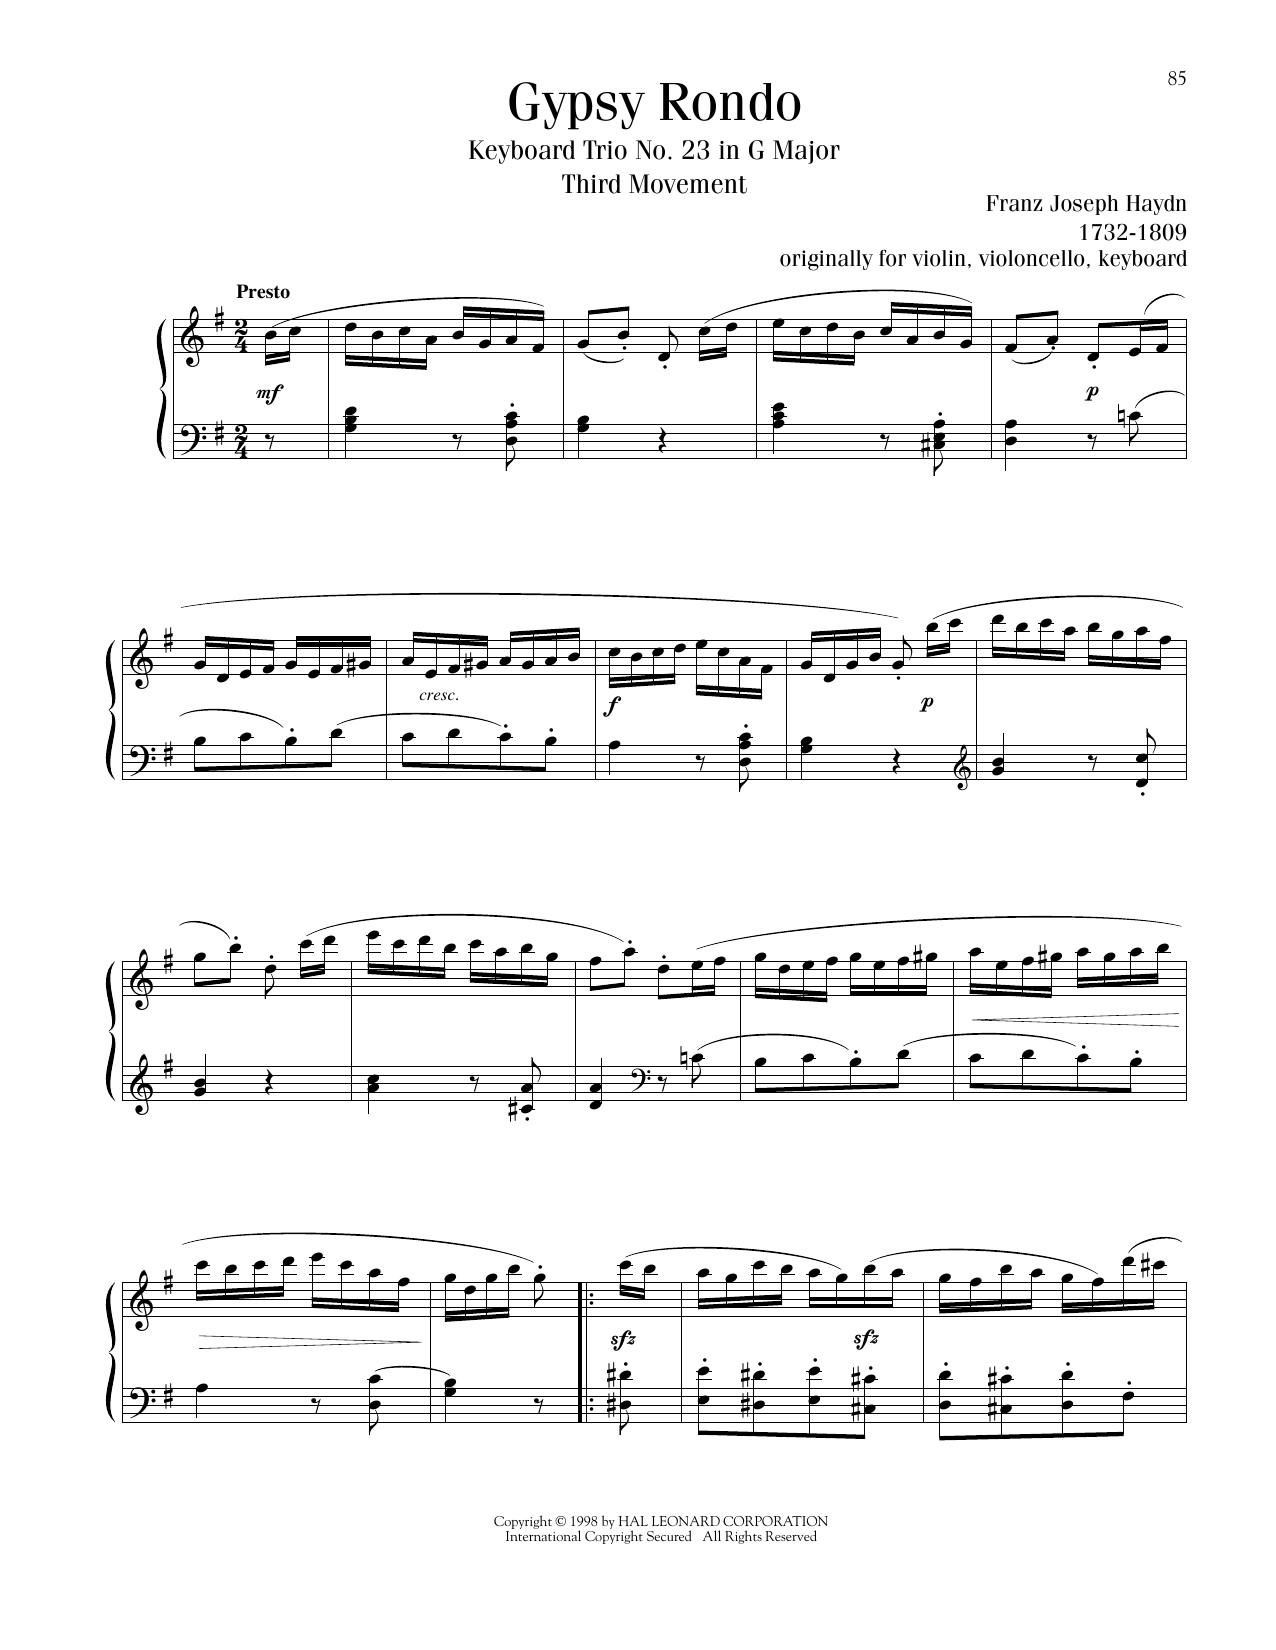 Franz Joseph Haydn Gypsy Rondo sheet music notes printable PDF score